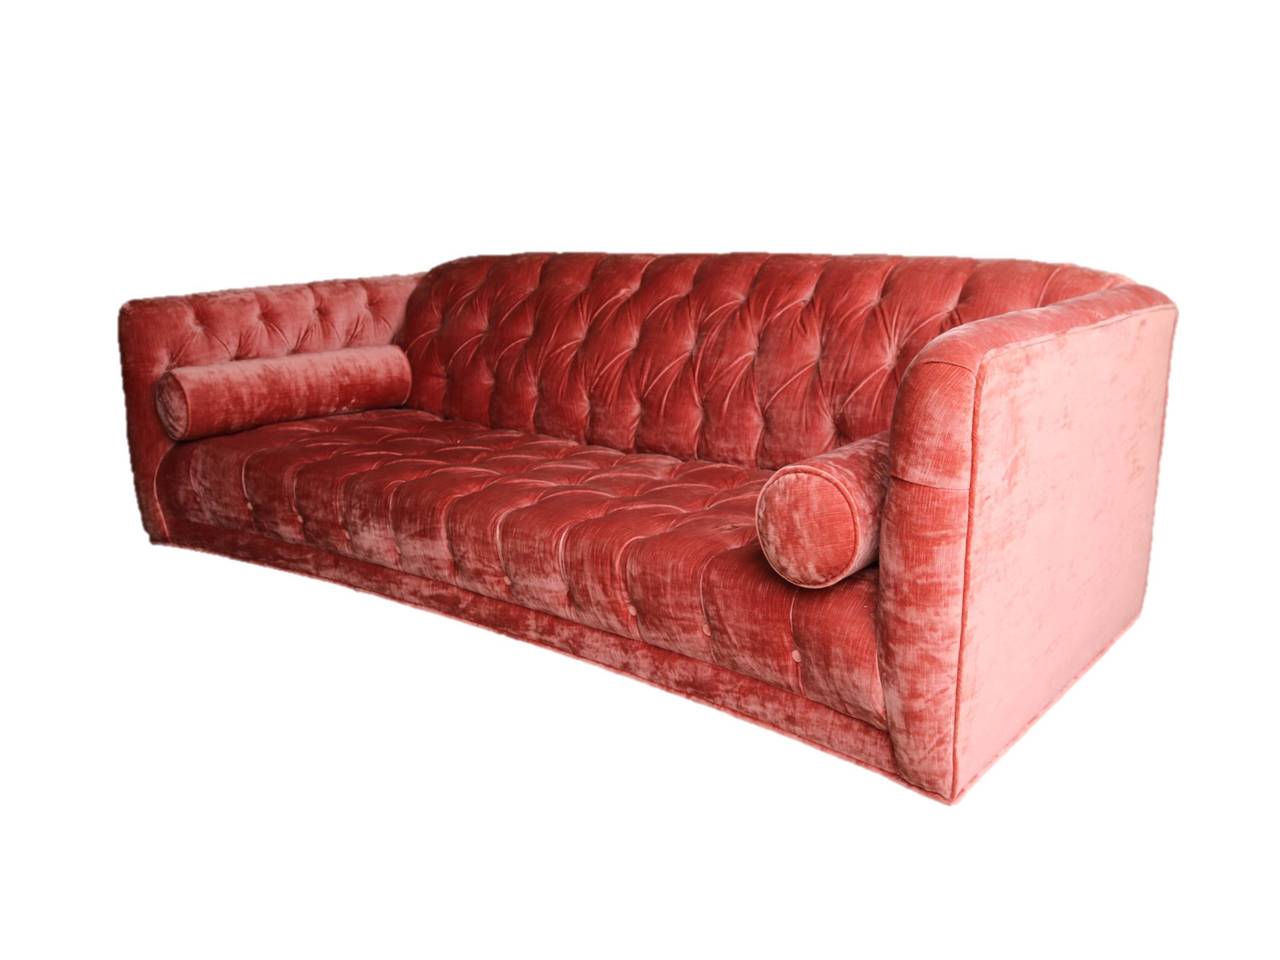 Exquisite Tufted Slub Velvet Chesterfield Sofa At 1stdibs